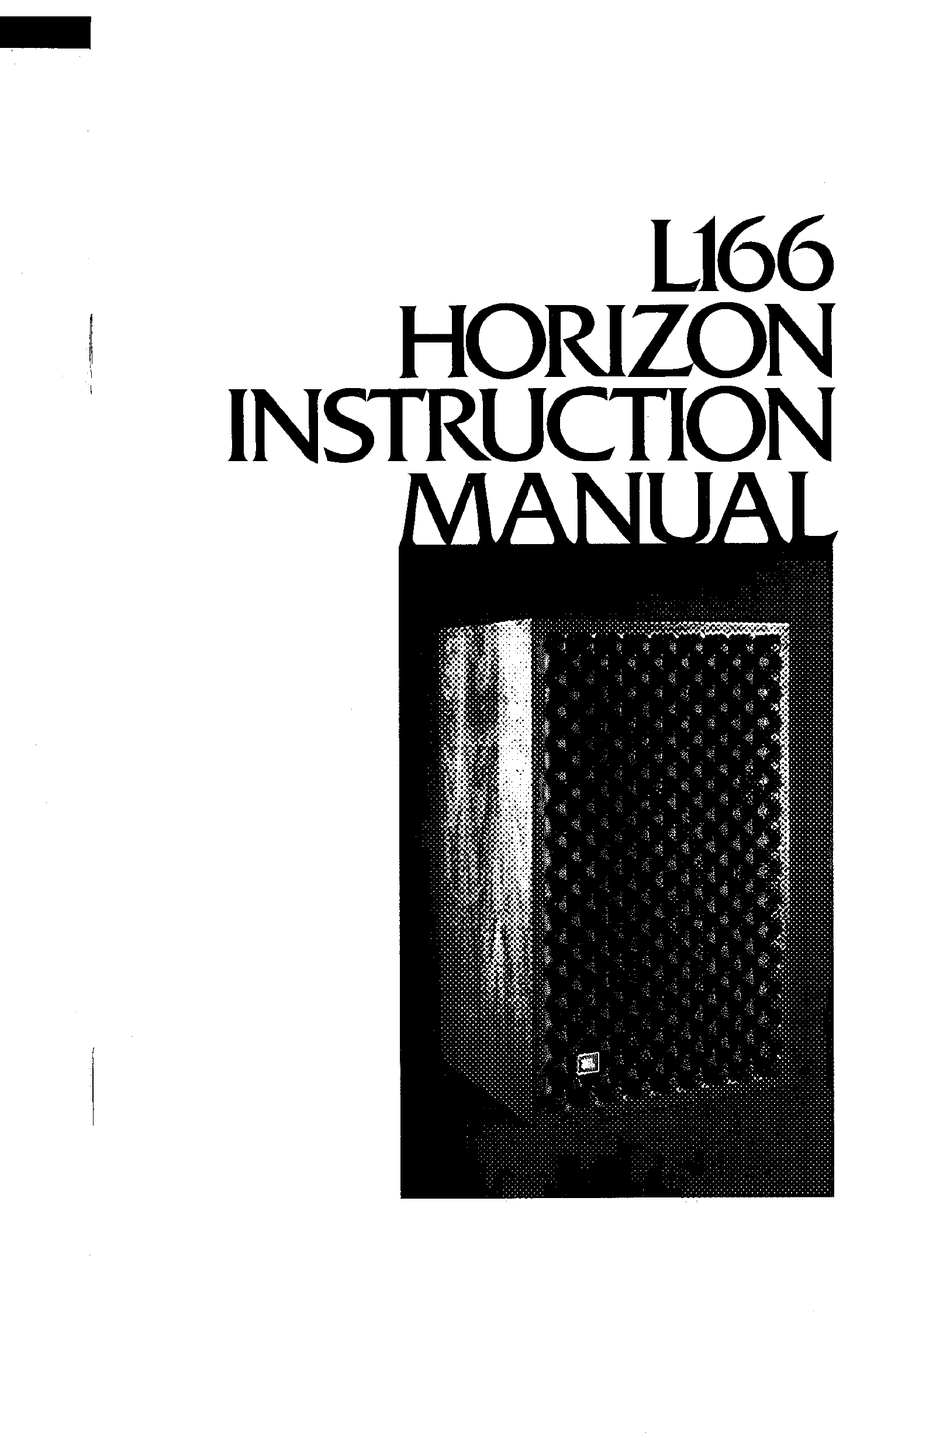 JBL L166 HORIZON MANUAL ManualsLib